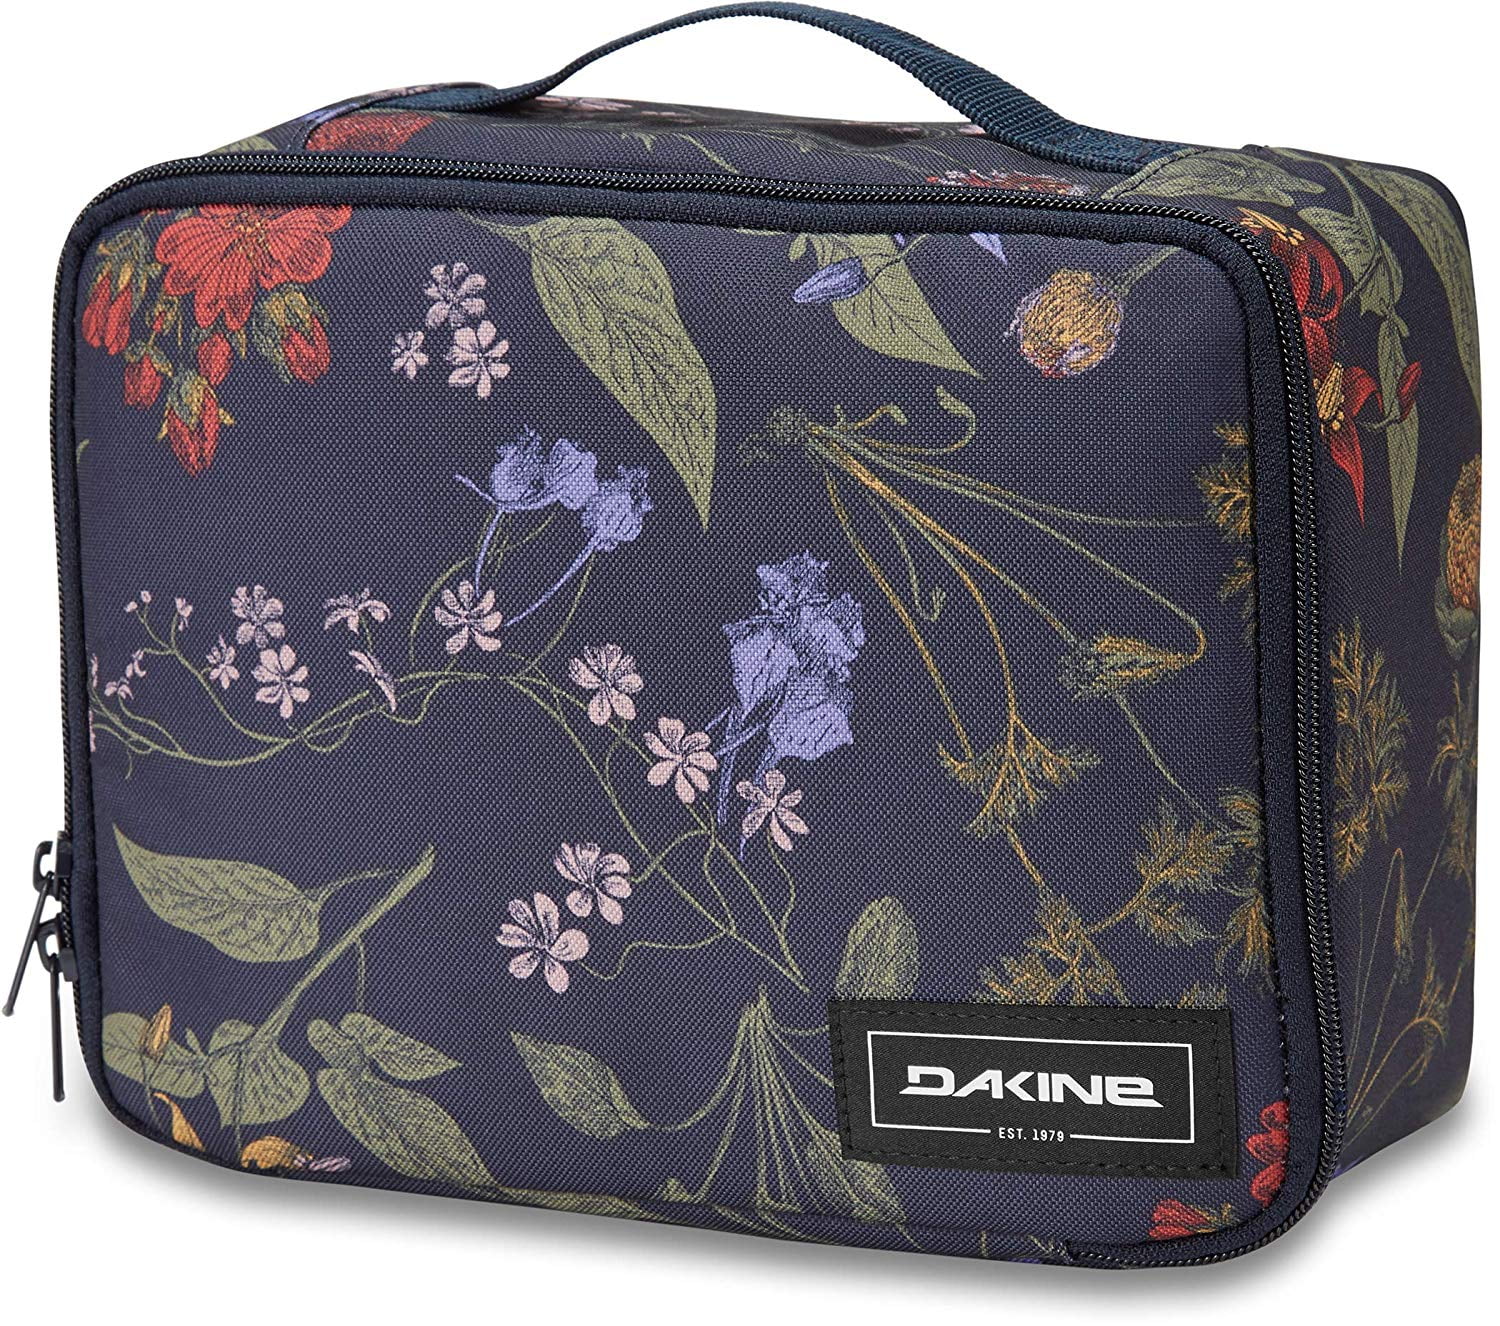 Dakine 5L Insulated Cooler Lunch Box (Botanics Pet) - Walmart.com